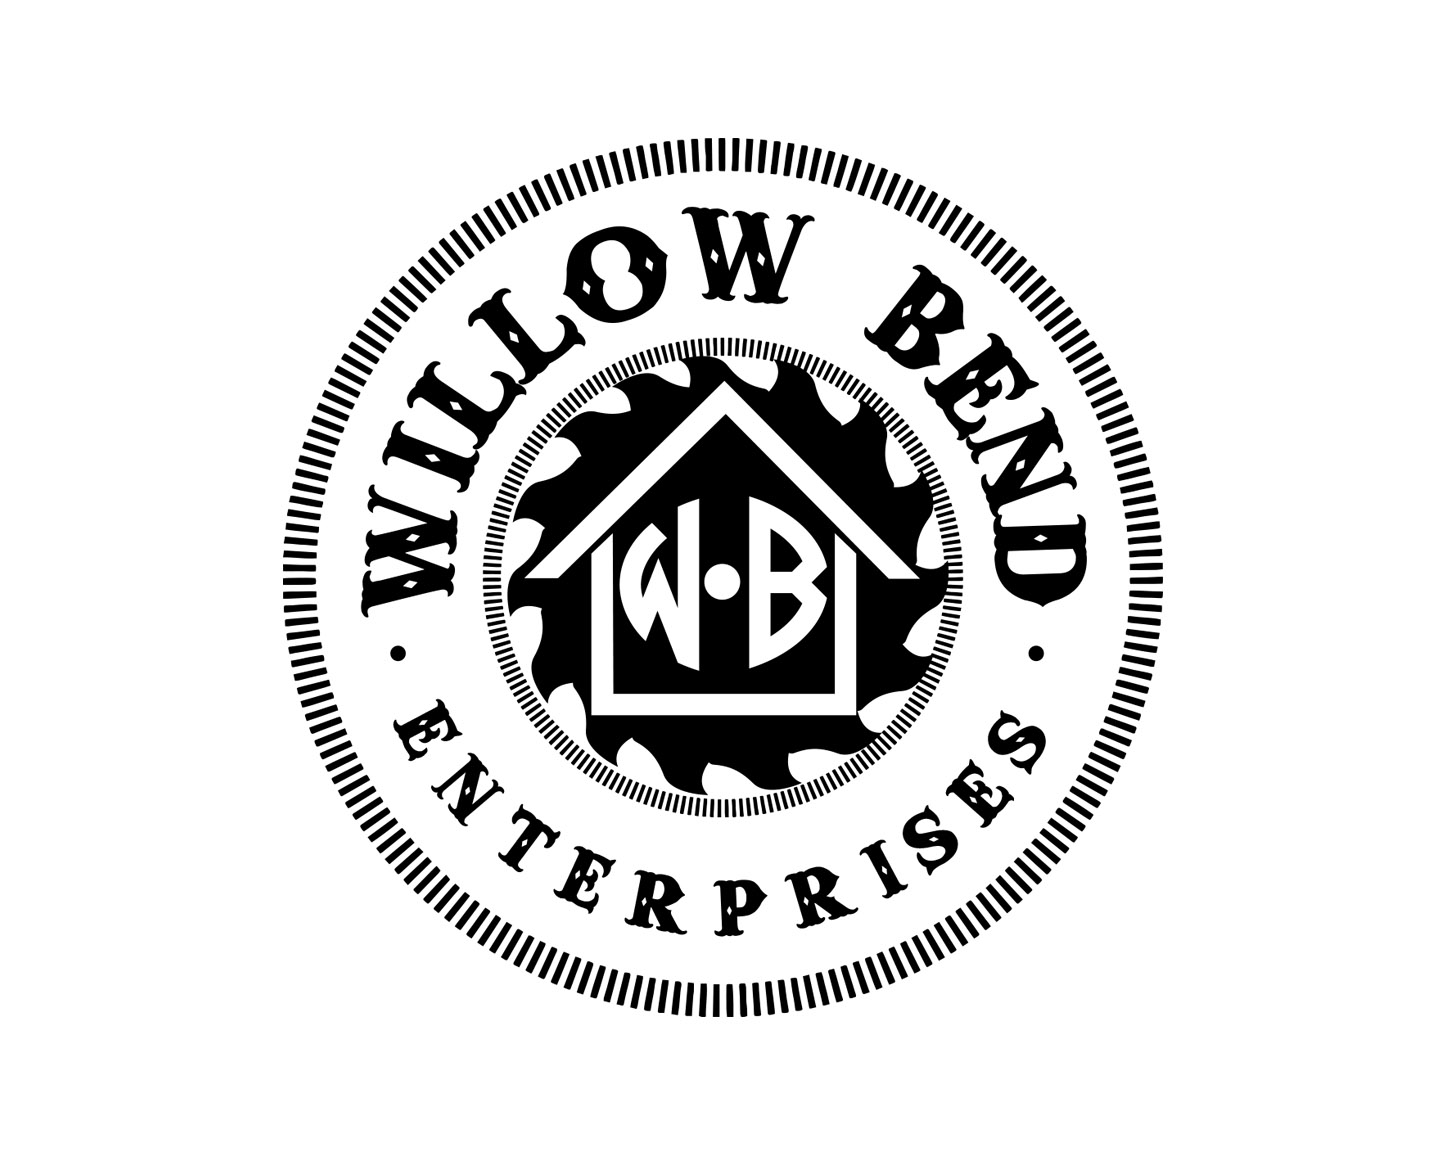 Logo Design Contest for Willow Bend Enterprises | Hatchwise